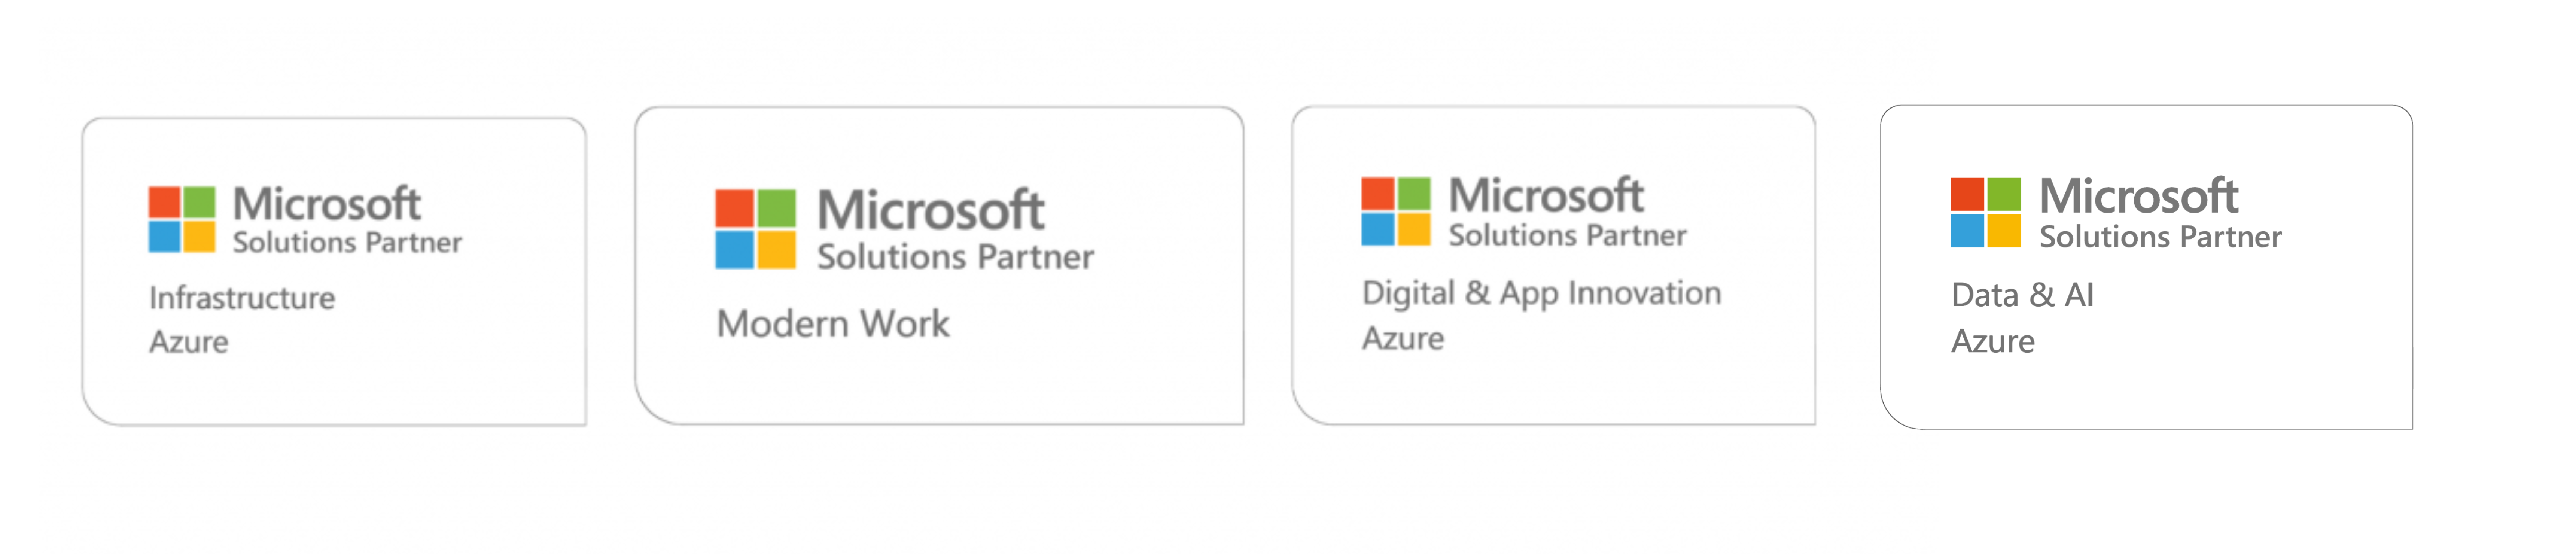 Microsoft Solutions Partner Image